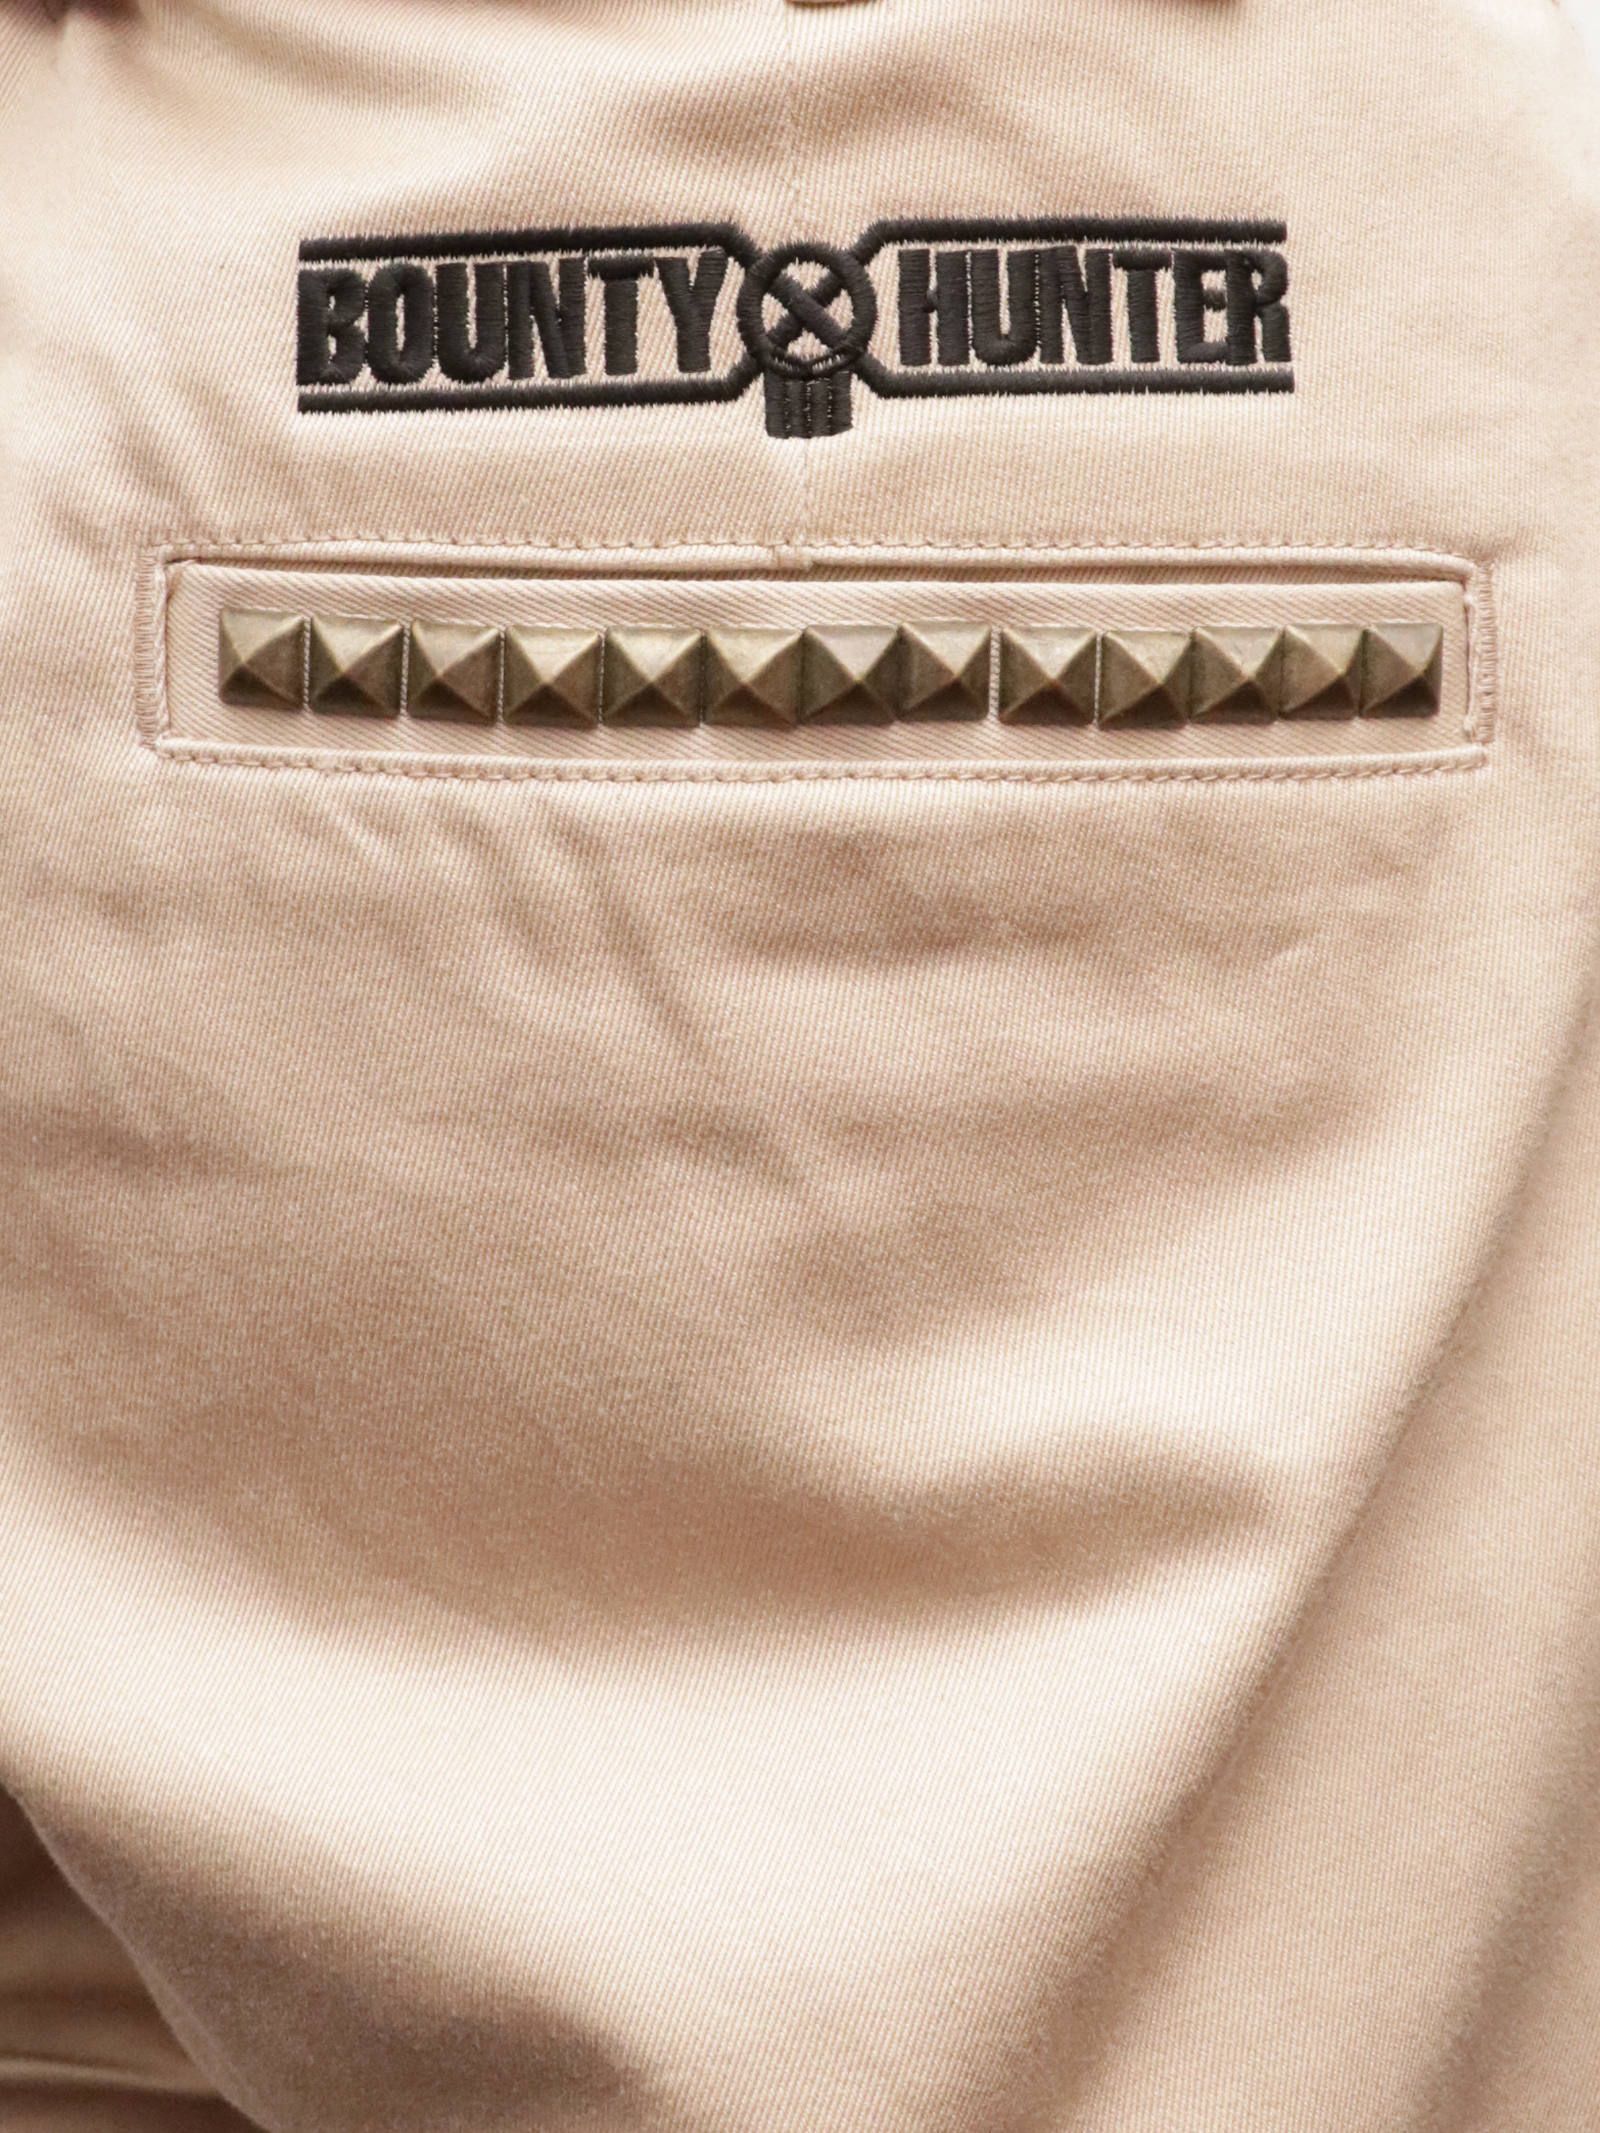 BOUNTY HUNTER - スタッズパンツ (ベージュ) / Studs Pants